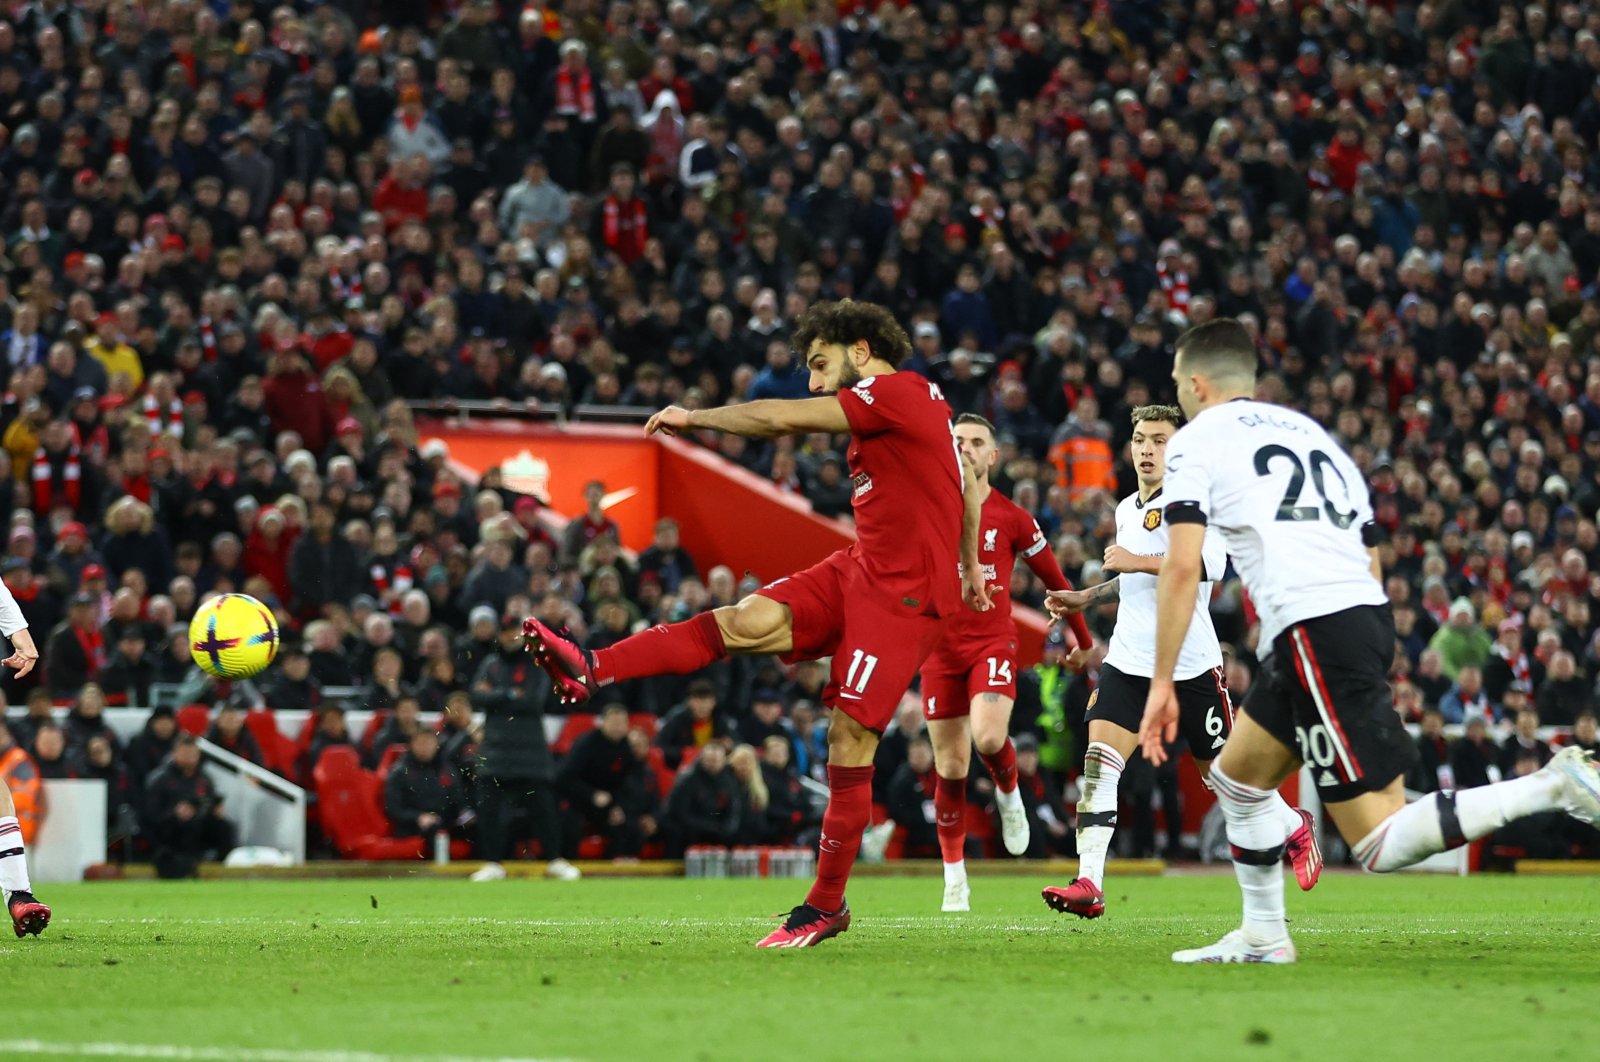 Liverpool menulis ulang sejarah dengan menjinakkan Man Utd 7-0